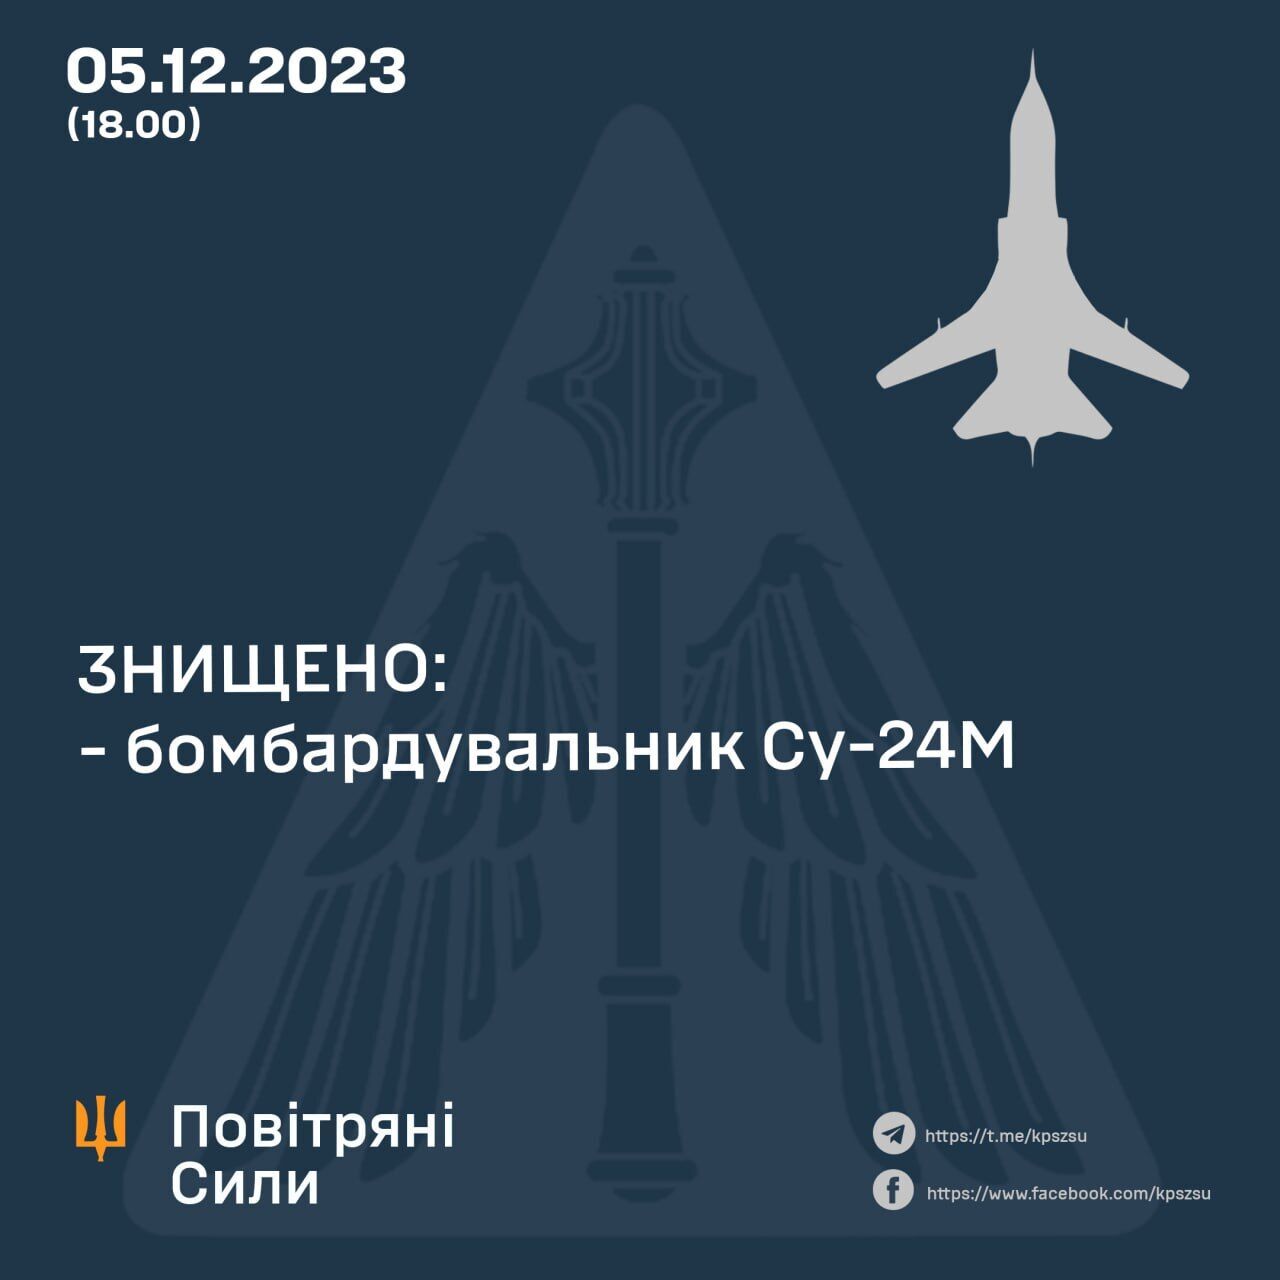 Russian Su-24M bomber  was destroyed near Zmiine